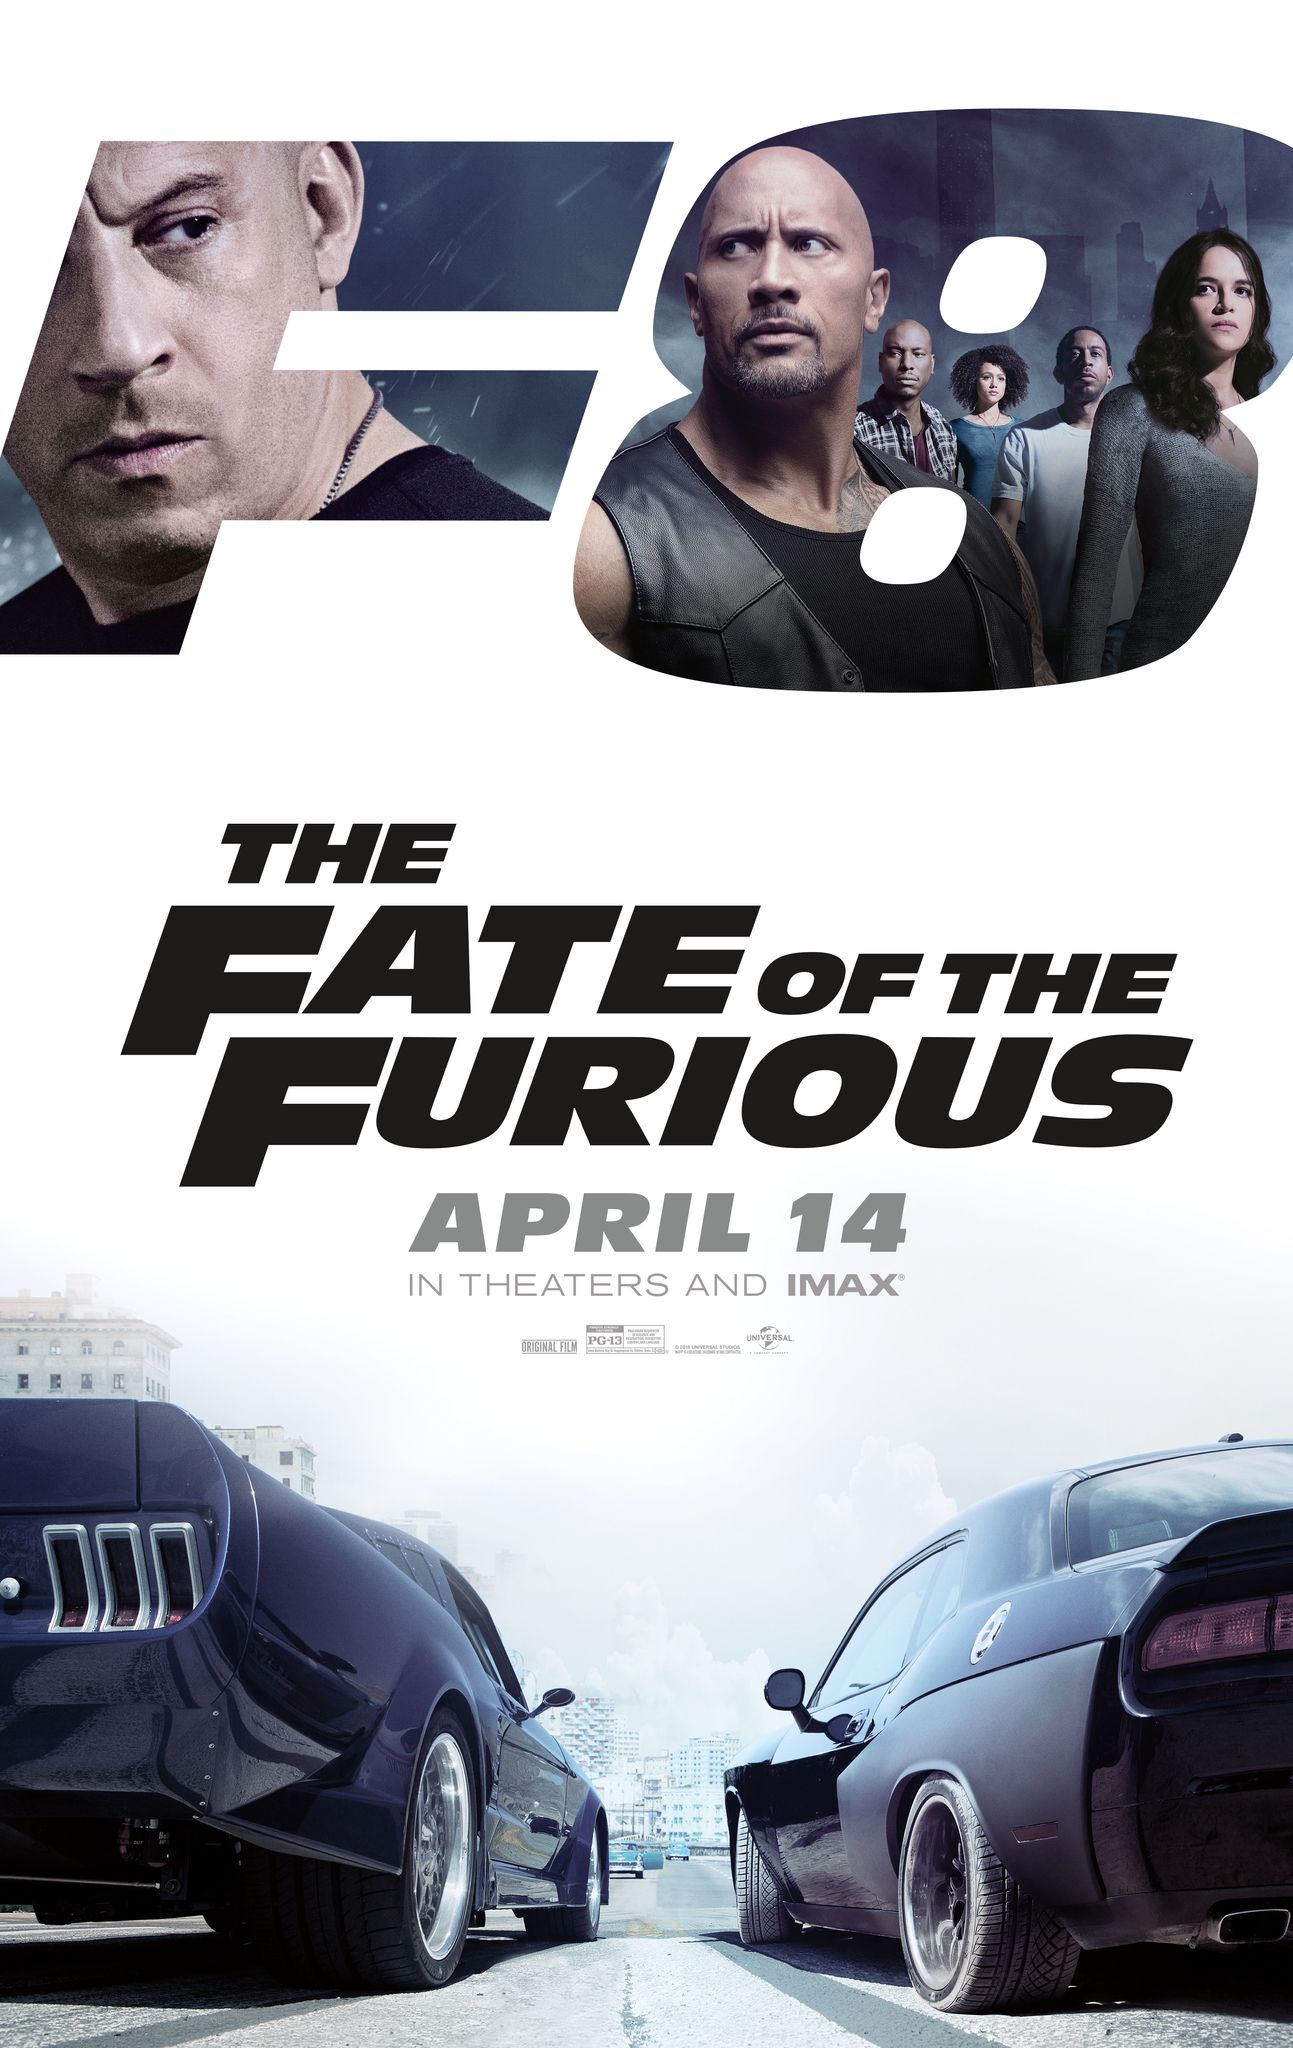 Fast and Furious เรียงภาคยังไง มีภาคอะไรบ้าง ดูทุกภาค ก่อน Fast 11 ภาคสุดท้าย